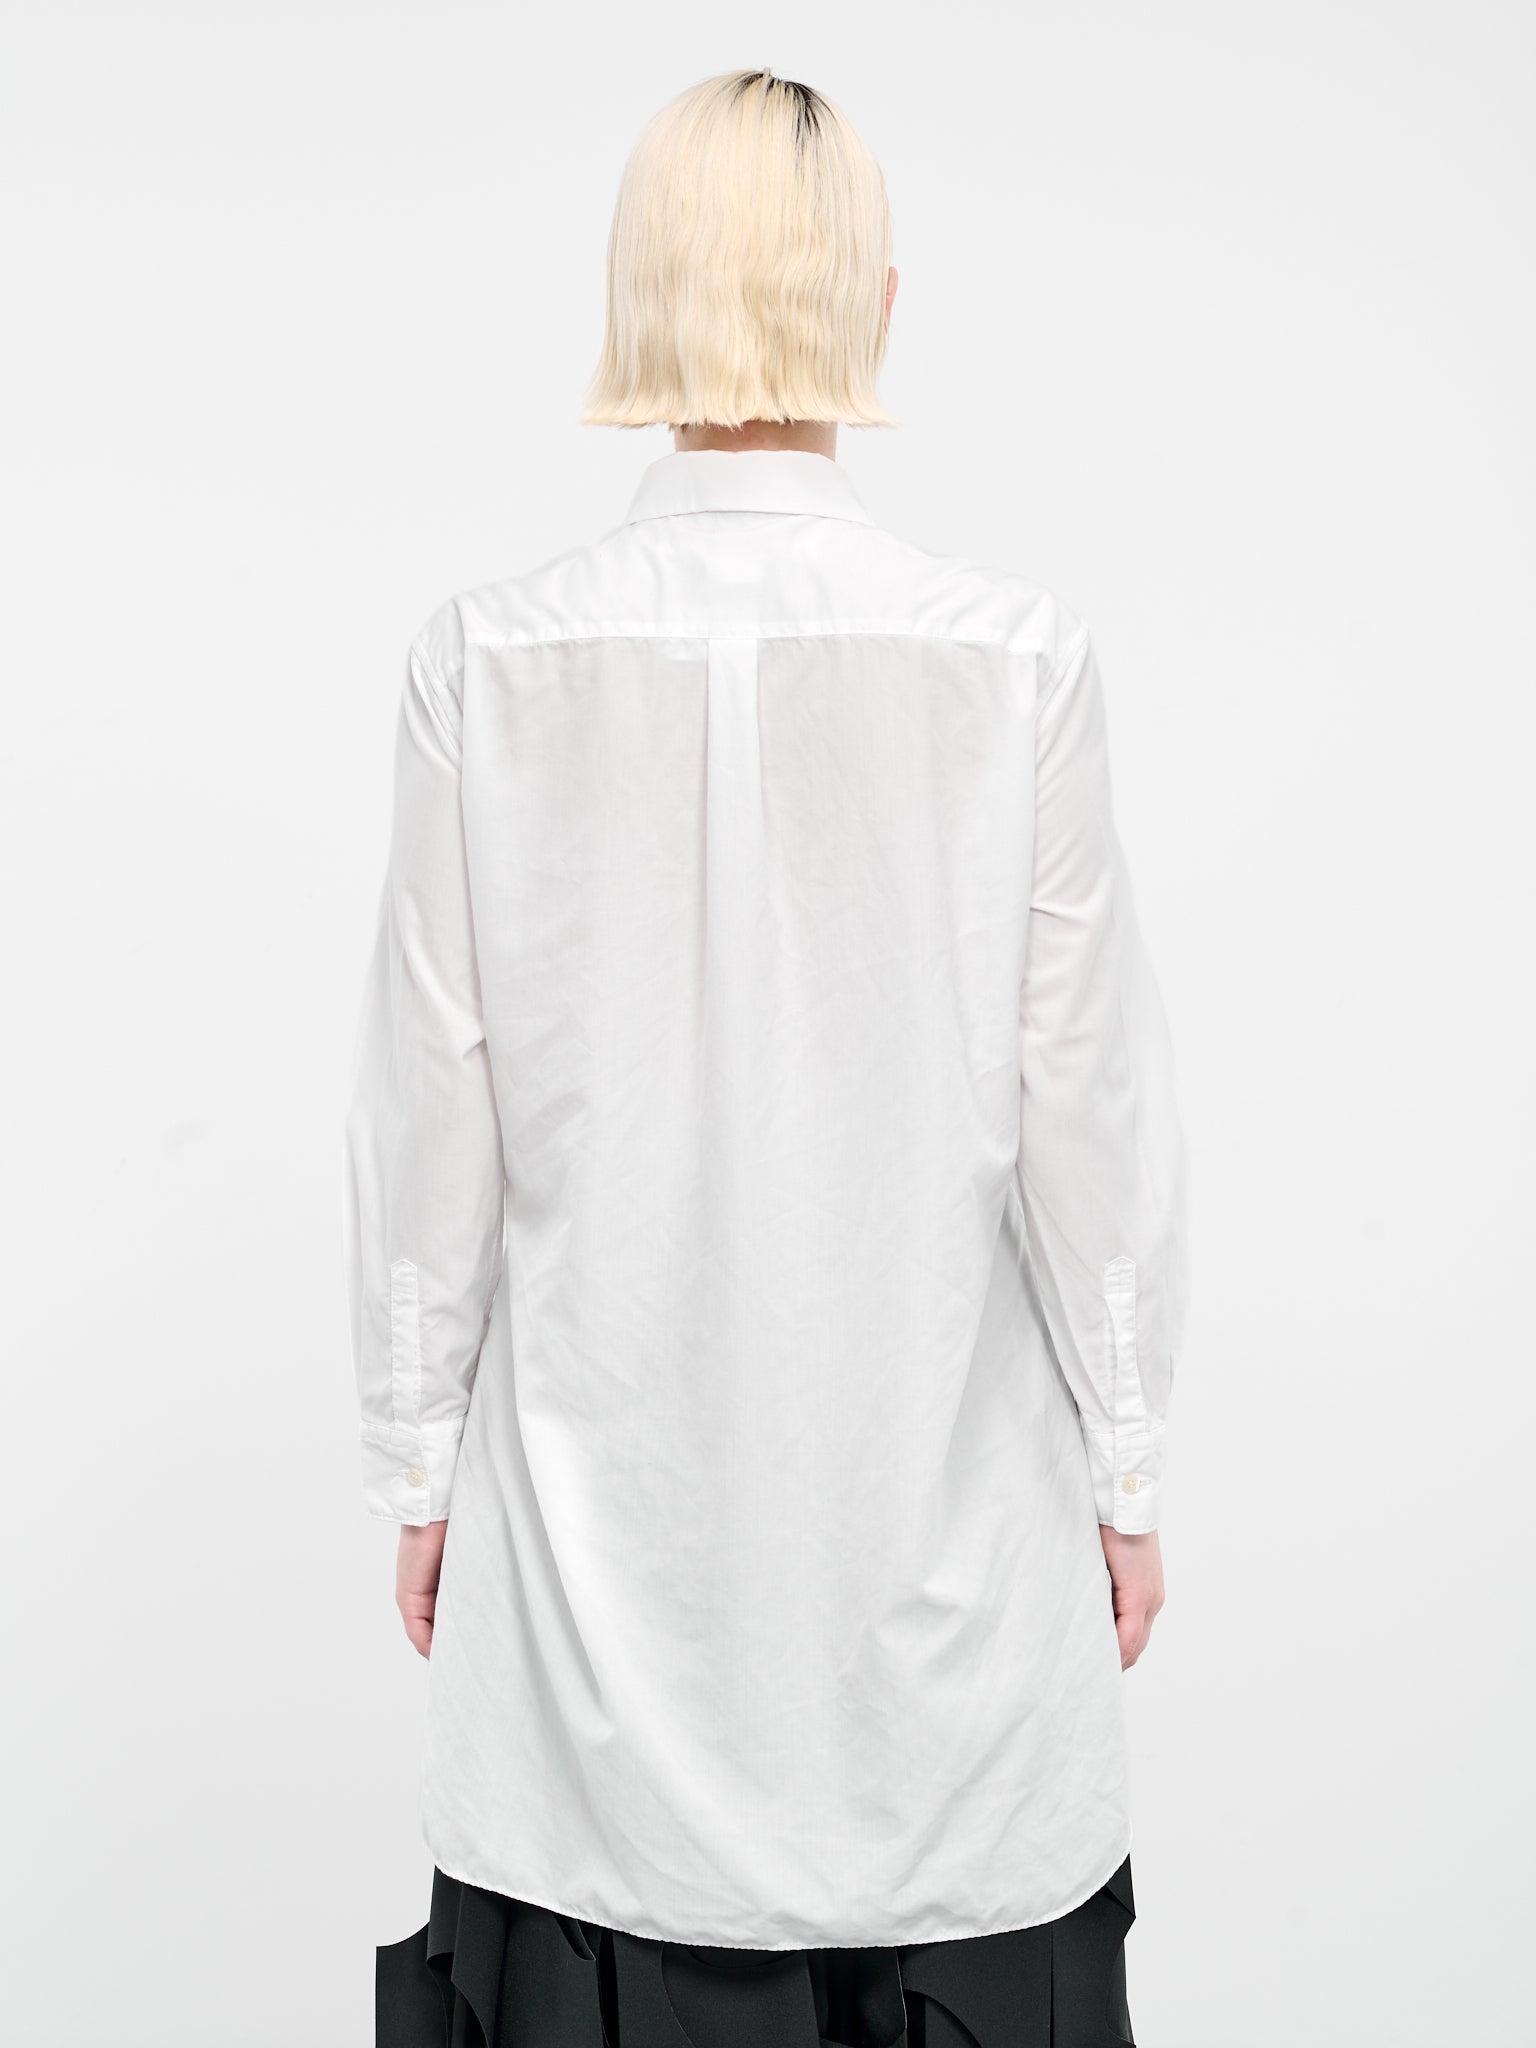 Ruched Longline Shirt (GM-B002-051-WHITE)